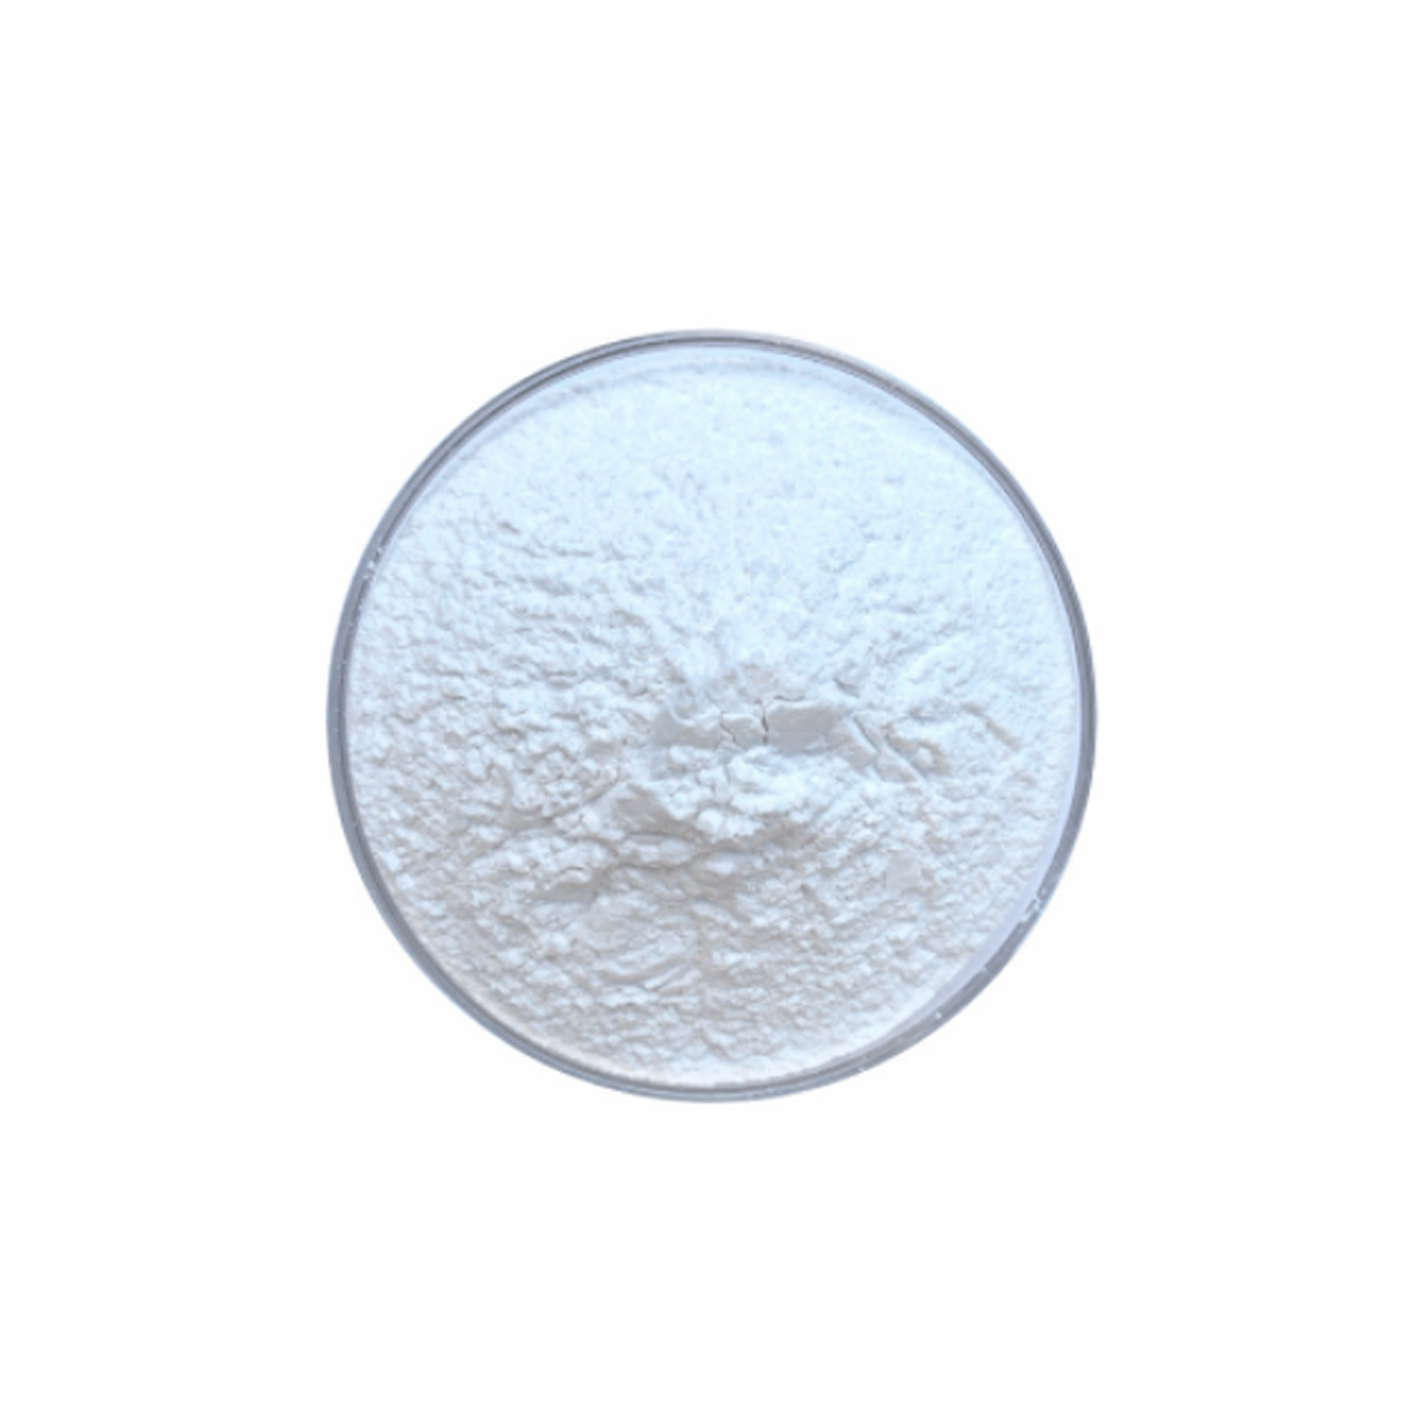 China High Quality Neodymium Nitrate Manufacturer –  99% Cerium chloride anhydrous CAS 7790-86-5 – Baoran